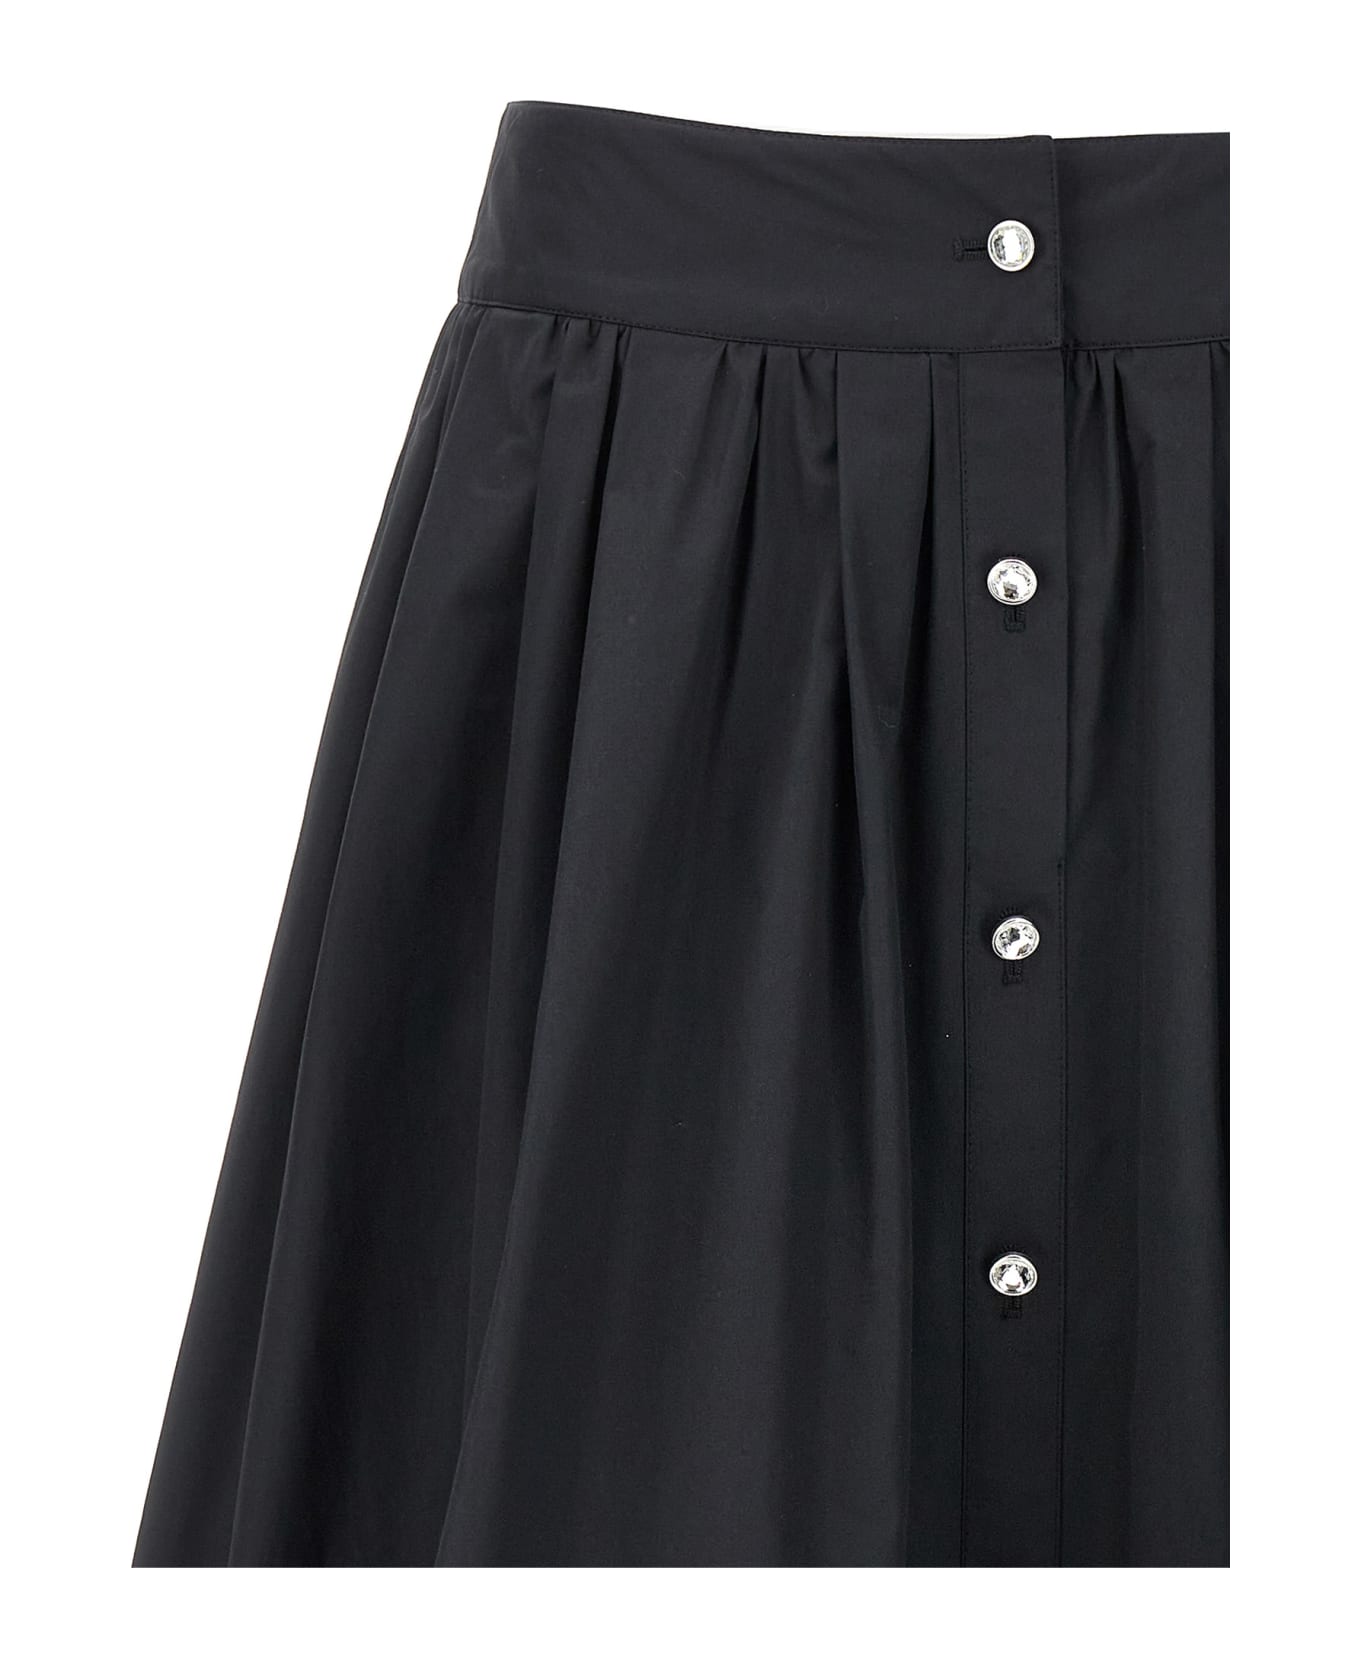 Moschino Jewel Button Nylon Blend Skirt - Black   スカート